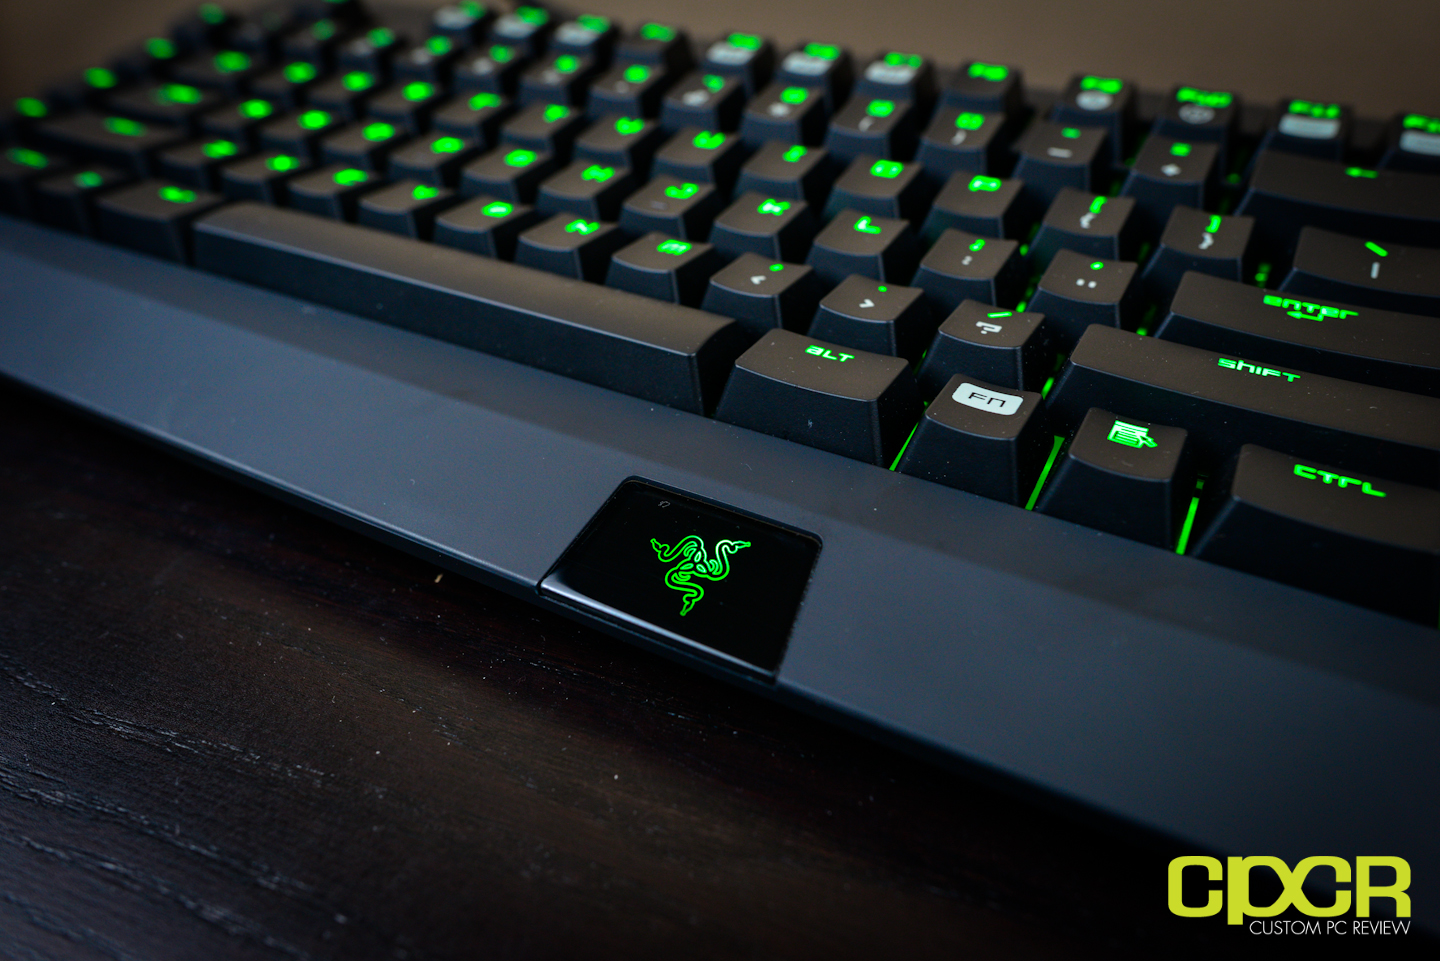 BlackWidow 2013 Ultimate Mechanical Gaming Keyboard Review - Custom PC Review